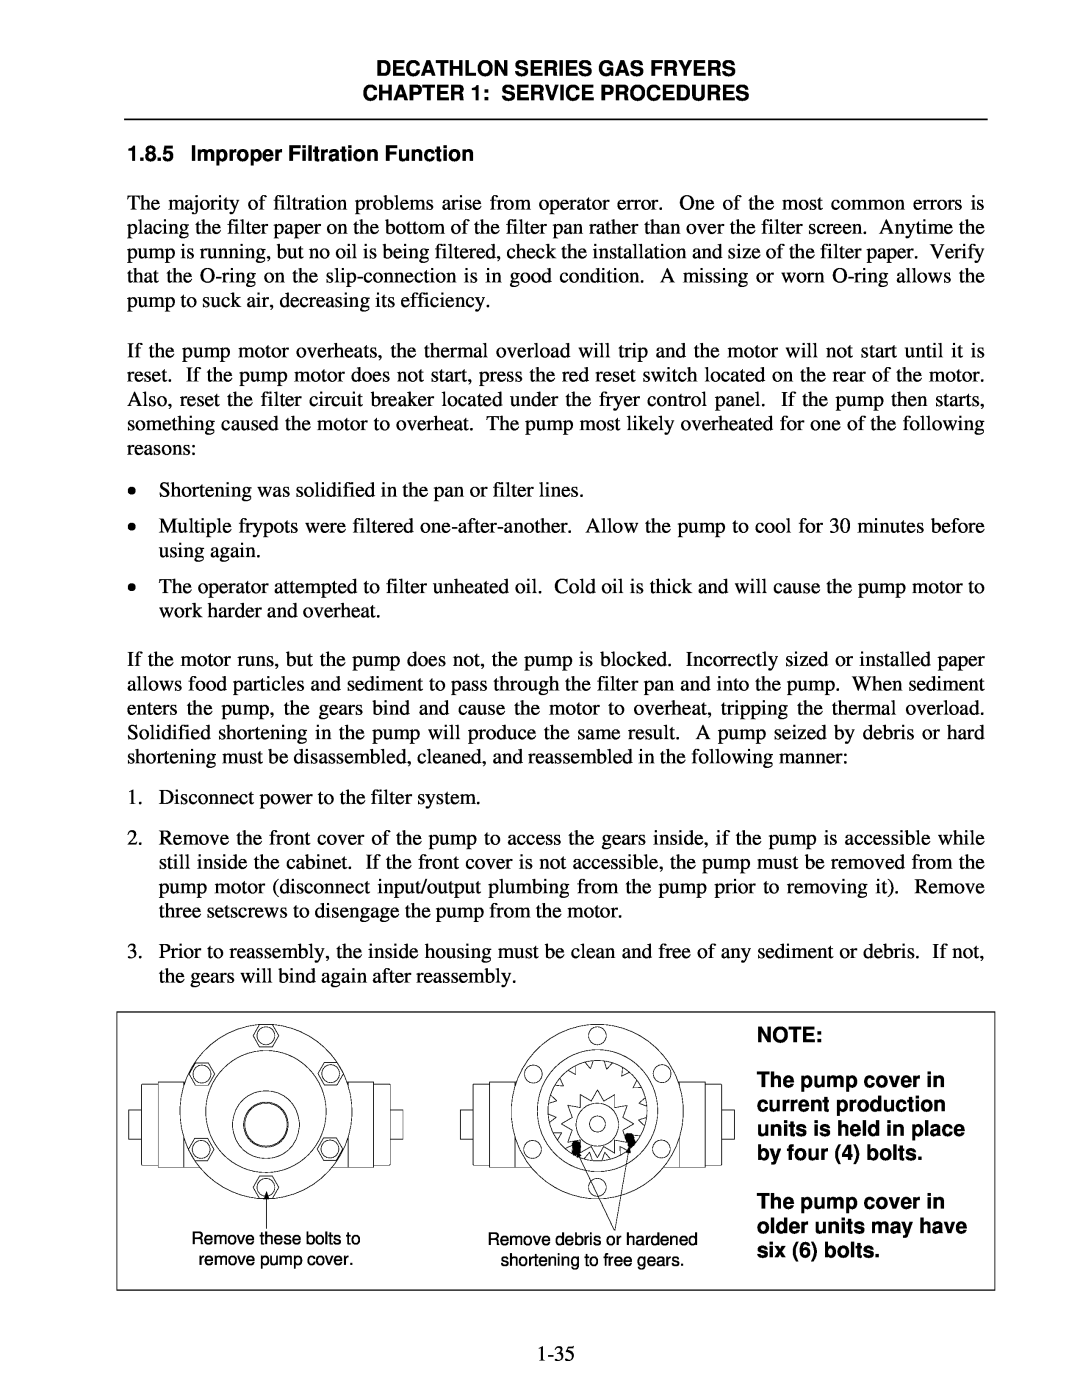 Frymaster FPD, SCFD manual Improper Filtration Function, Decathlon Series Gas Fryers, Service Procedures 